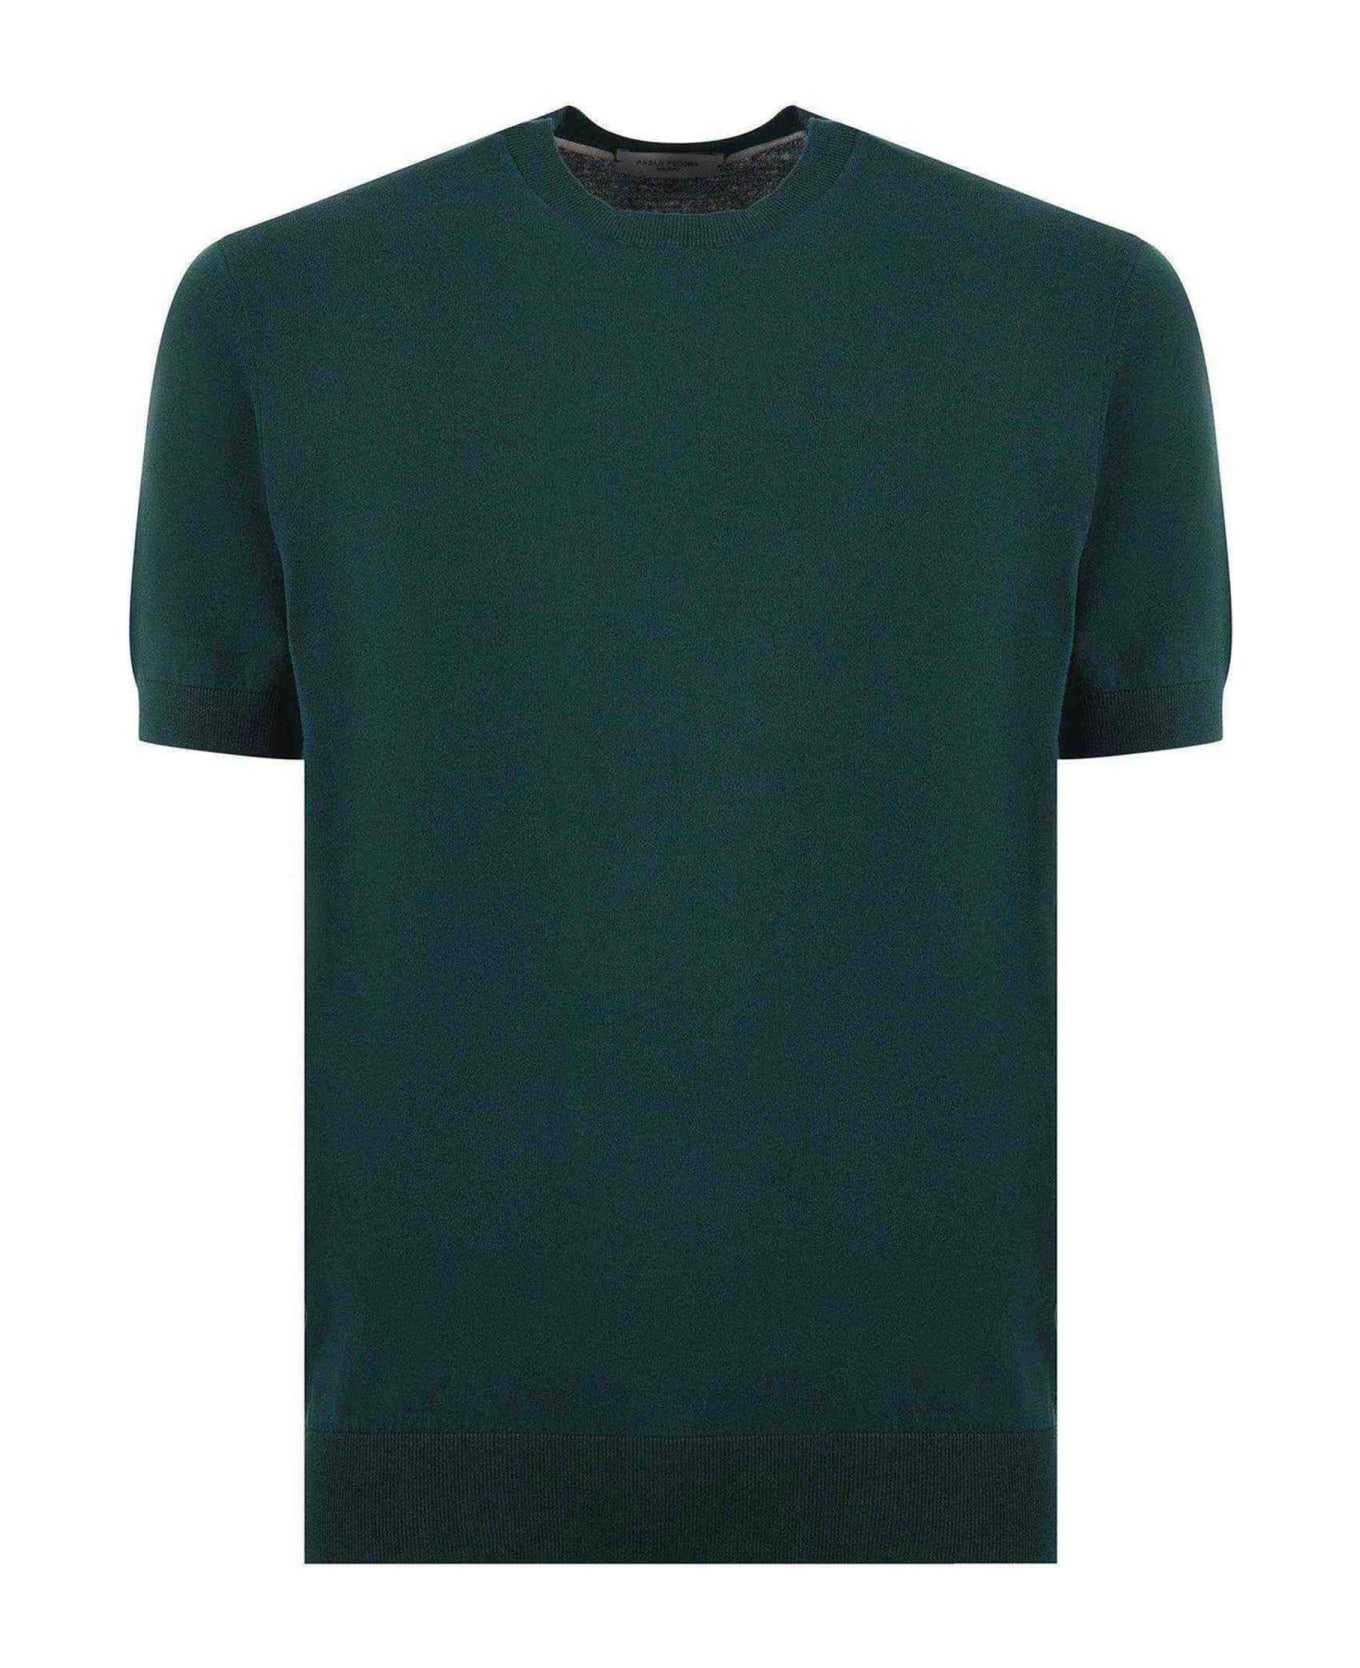 Paolo Pecora T-shirt - Verde inglese シャツ